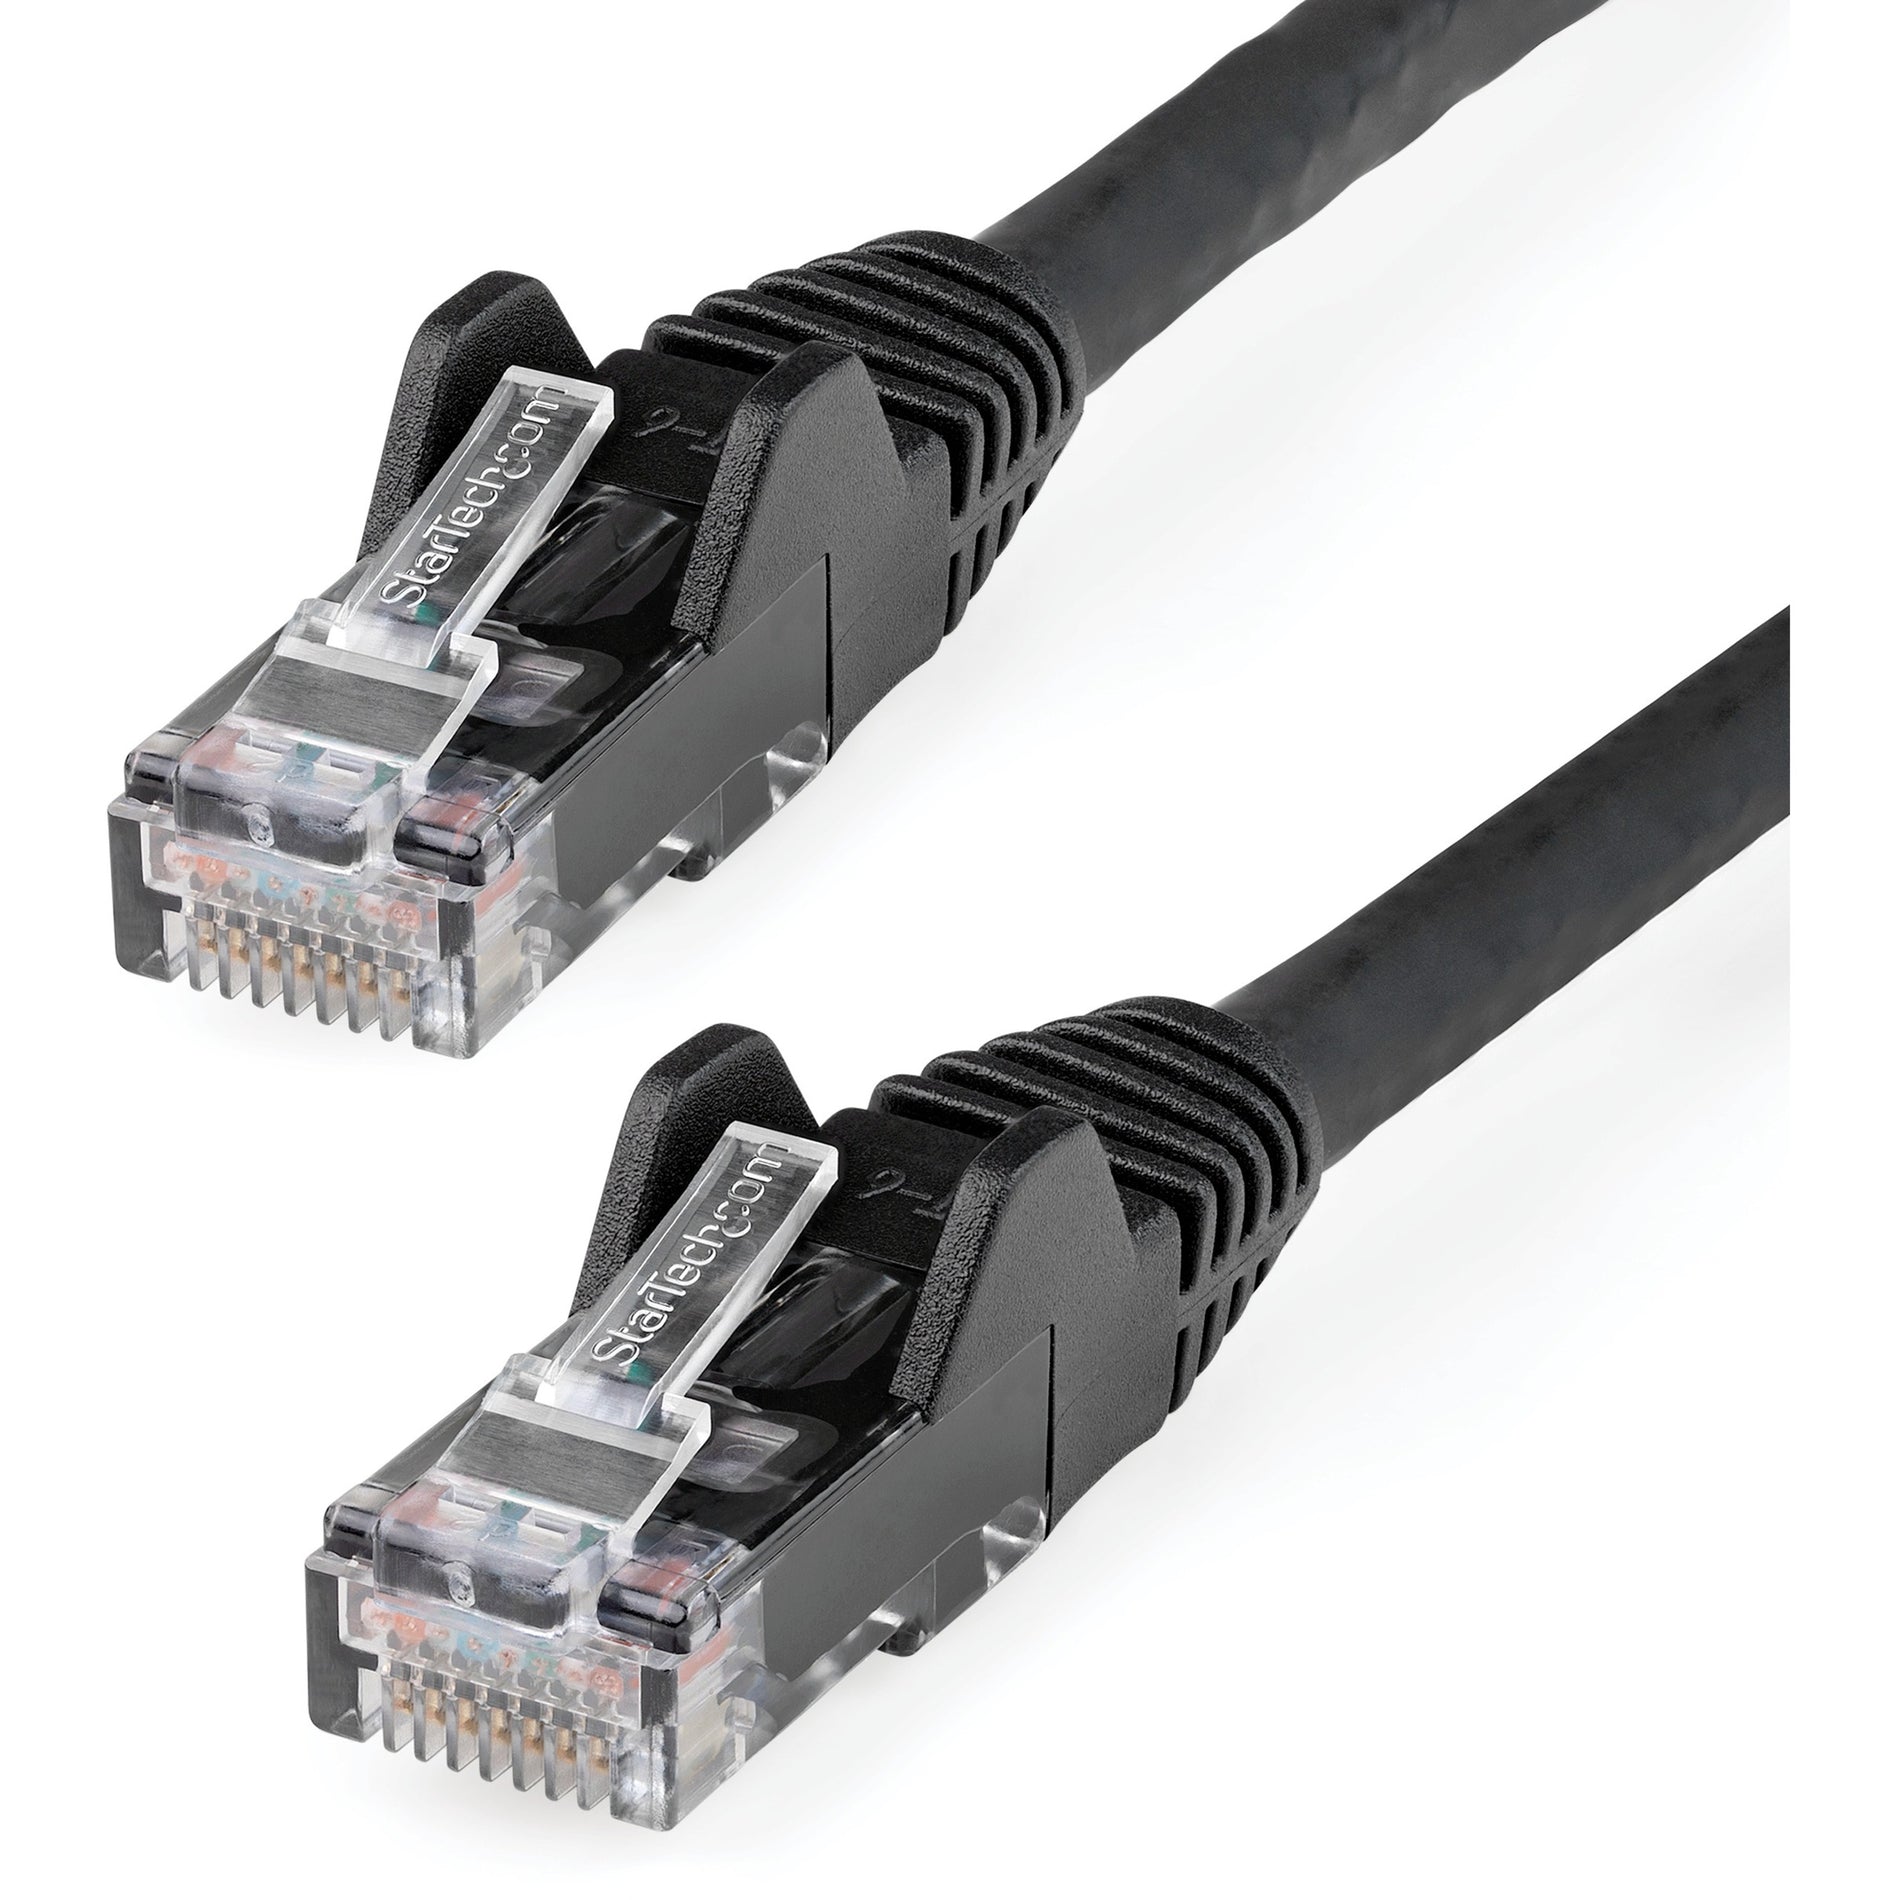 StarTech.com N6PATCH125BK Cat6 Patch Cable with Snagless RJ45 Connectors - Long Ethernet Cable, 125 ft Black Cat 6 UTP Cable